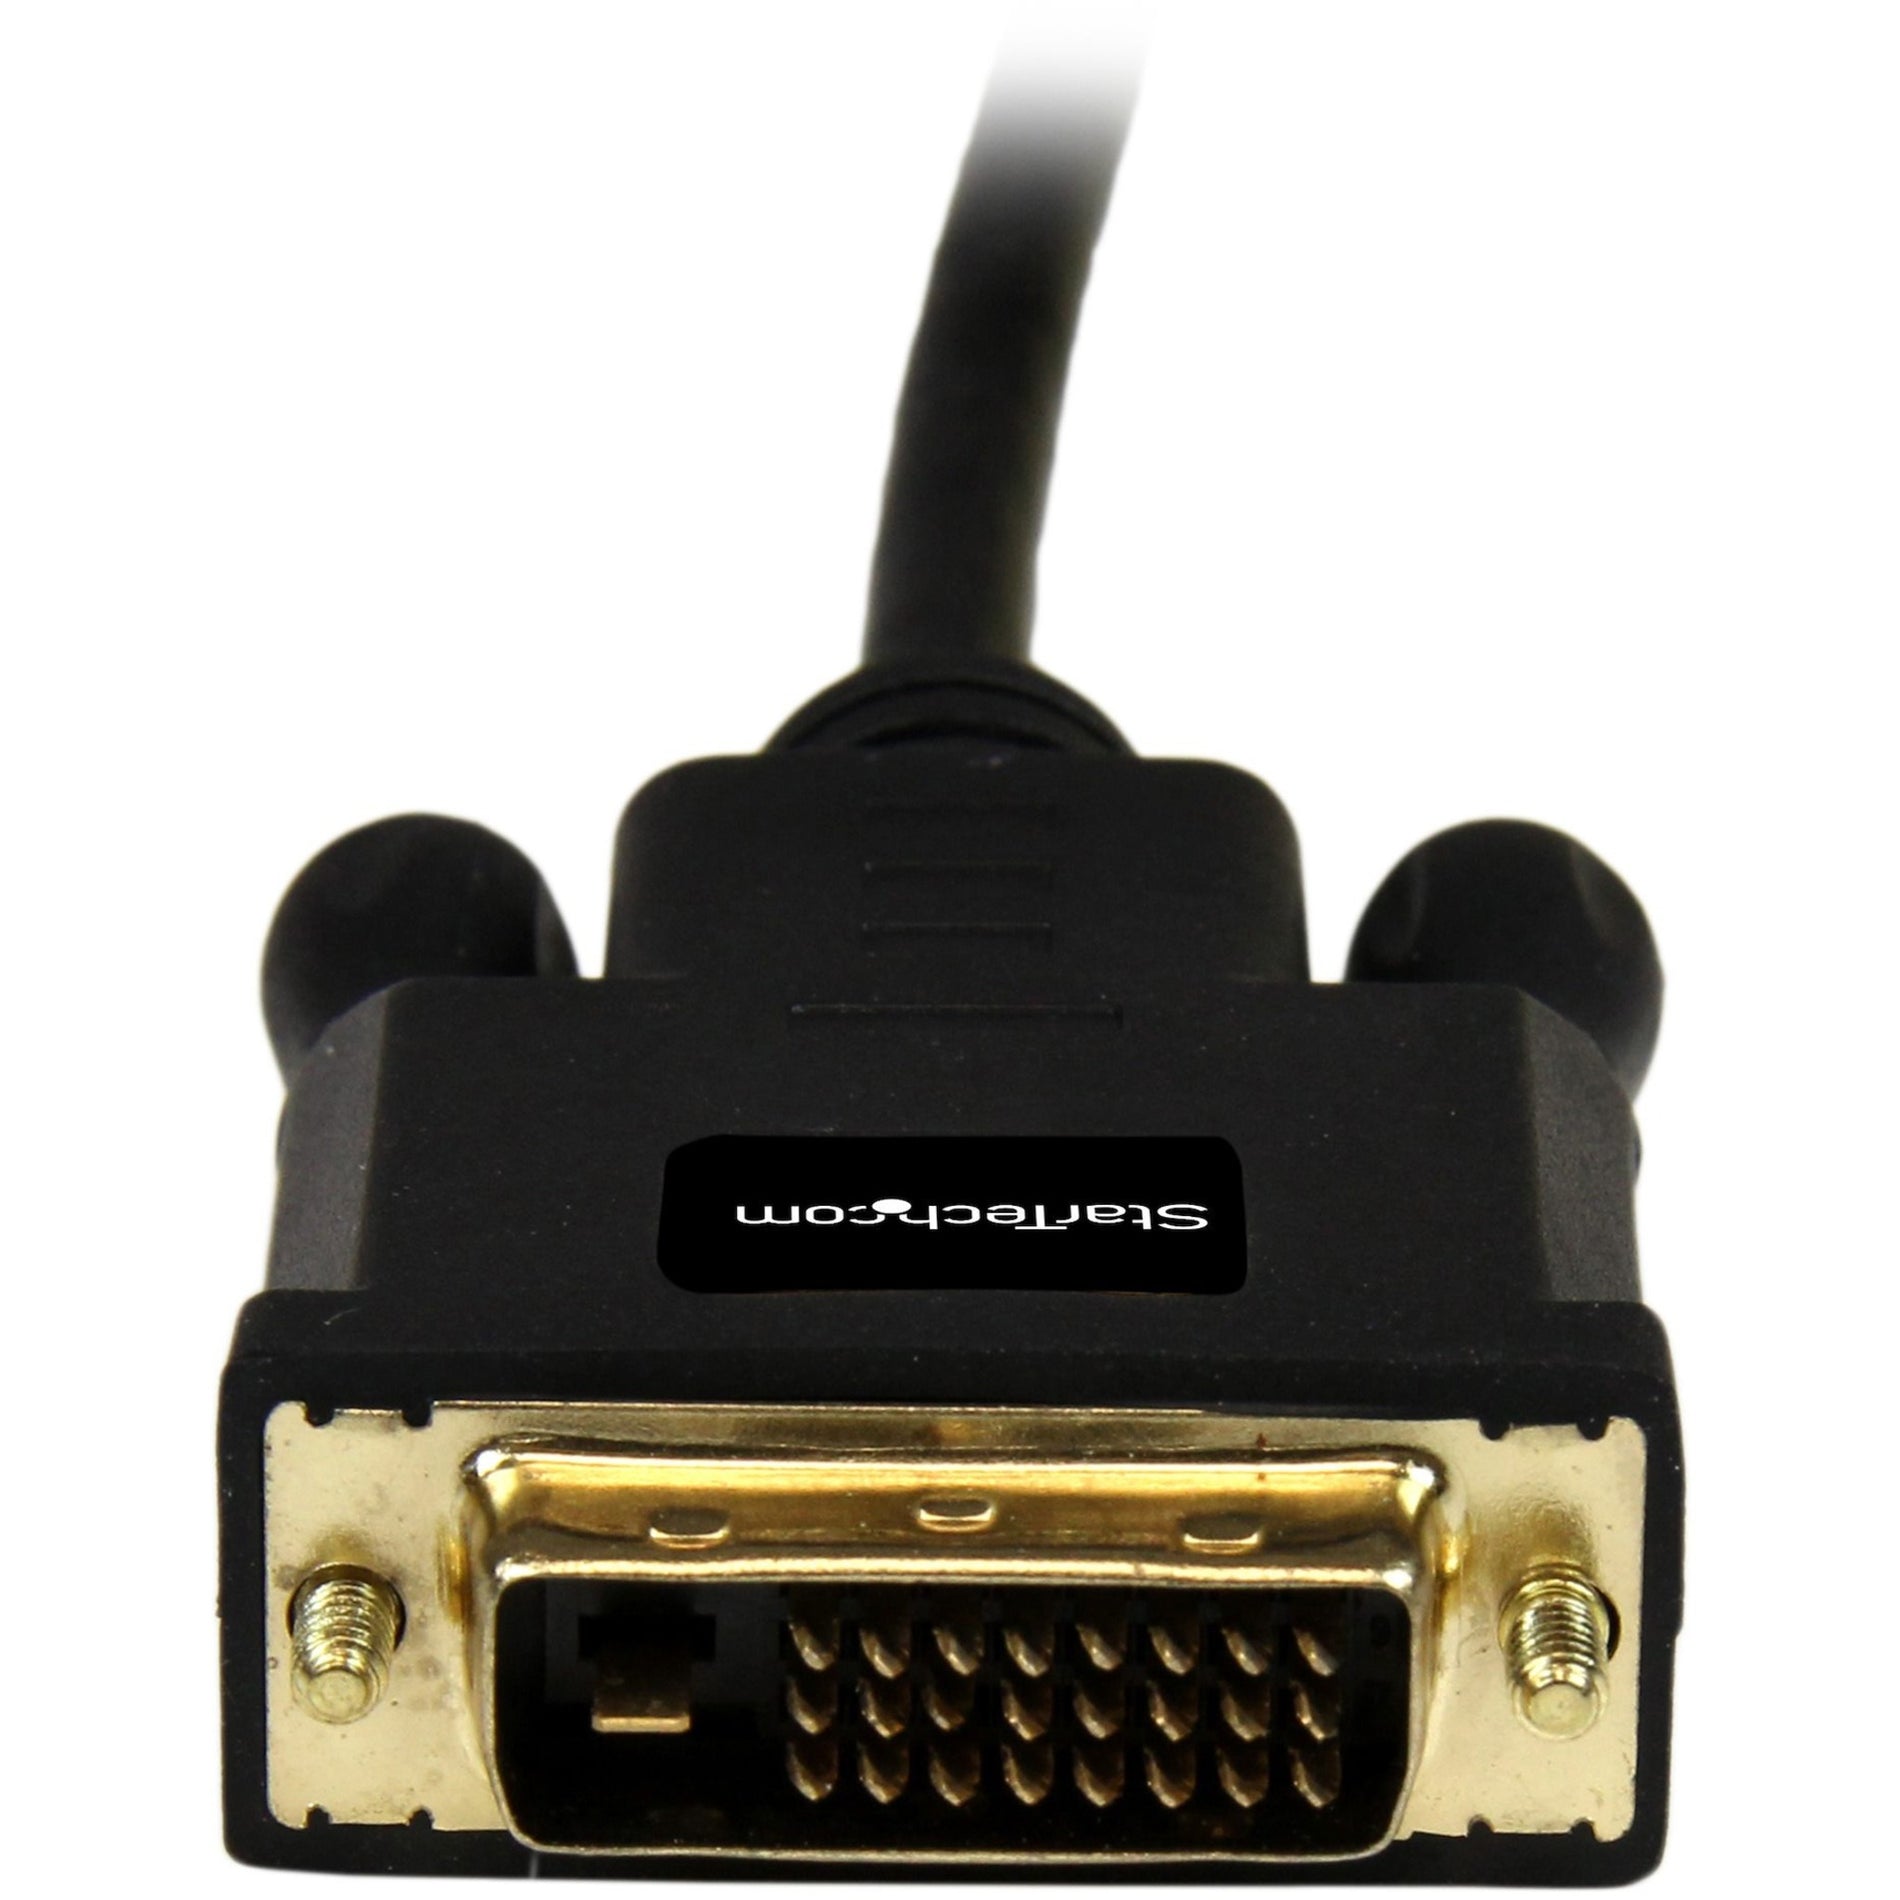 StarTech.com MDP2DVIMM10B Mini DisplayPort to DVI Adapter Converter Cable - Black, 10 ft, 1920x1200